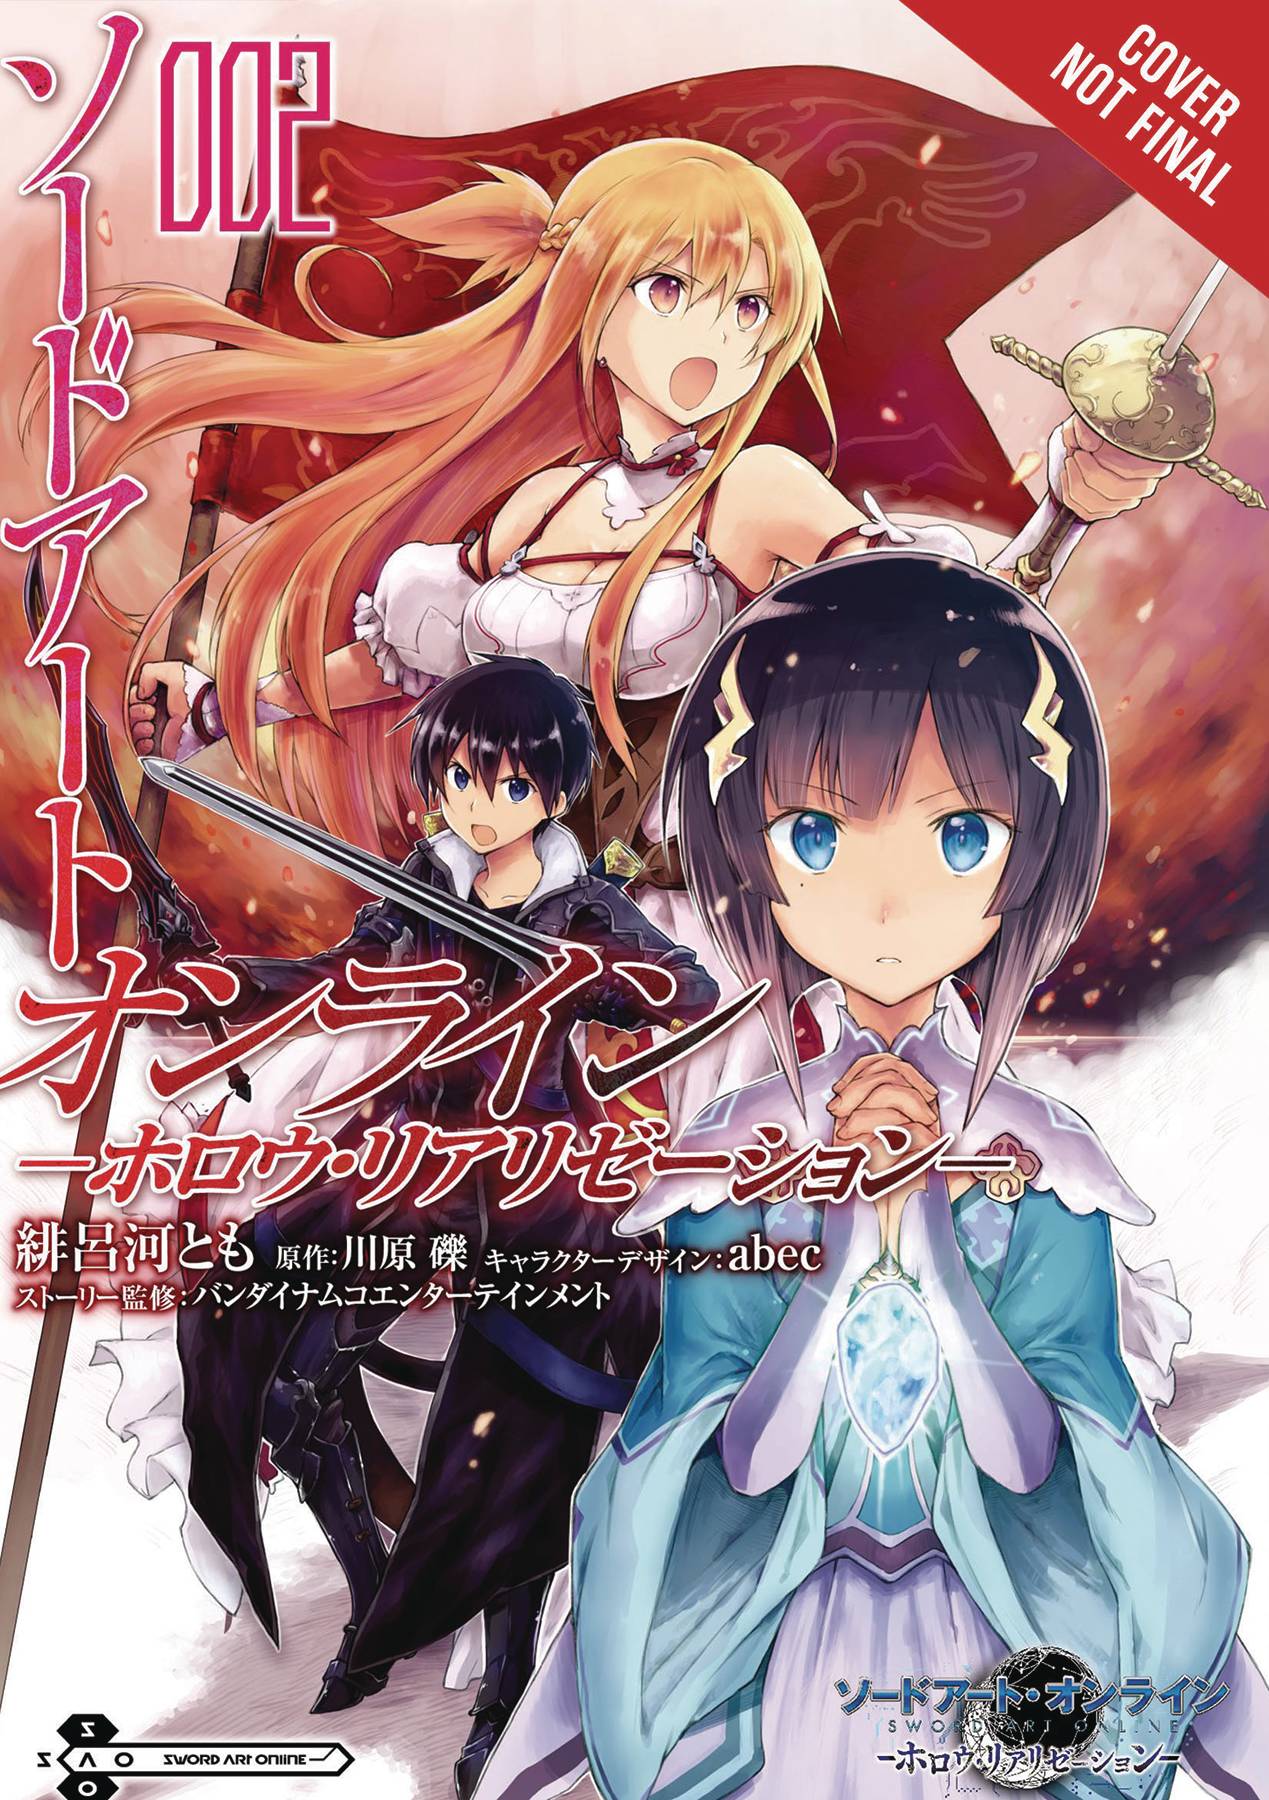 Sword Art Online Hollow Realization Manga Volume 2